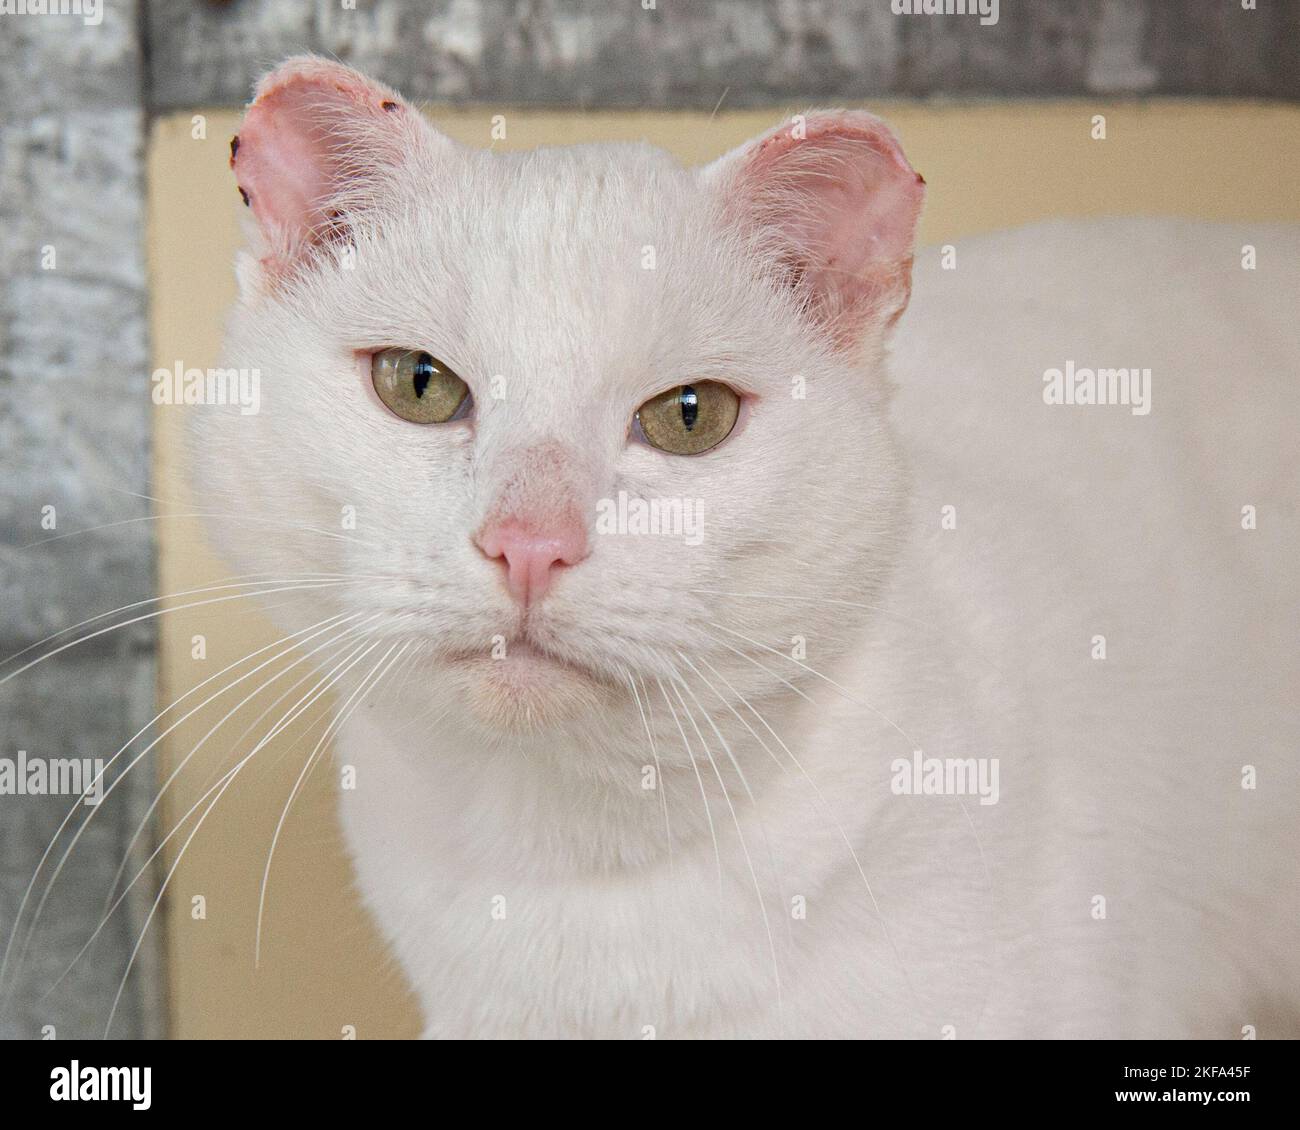 white cat with sunburned ears Stock Photo